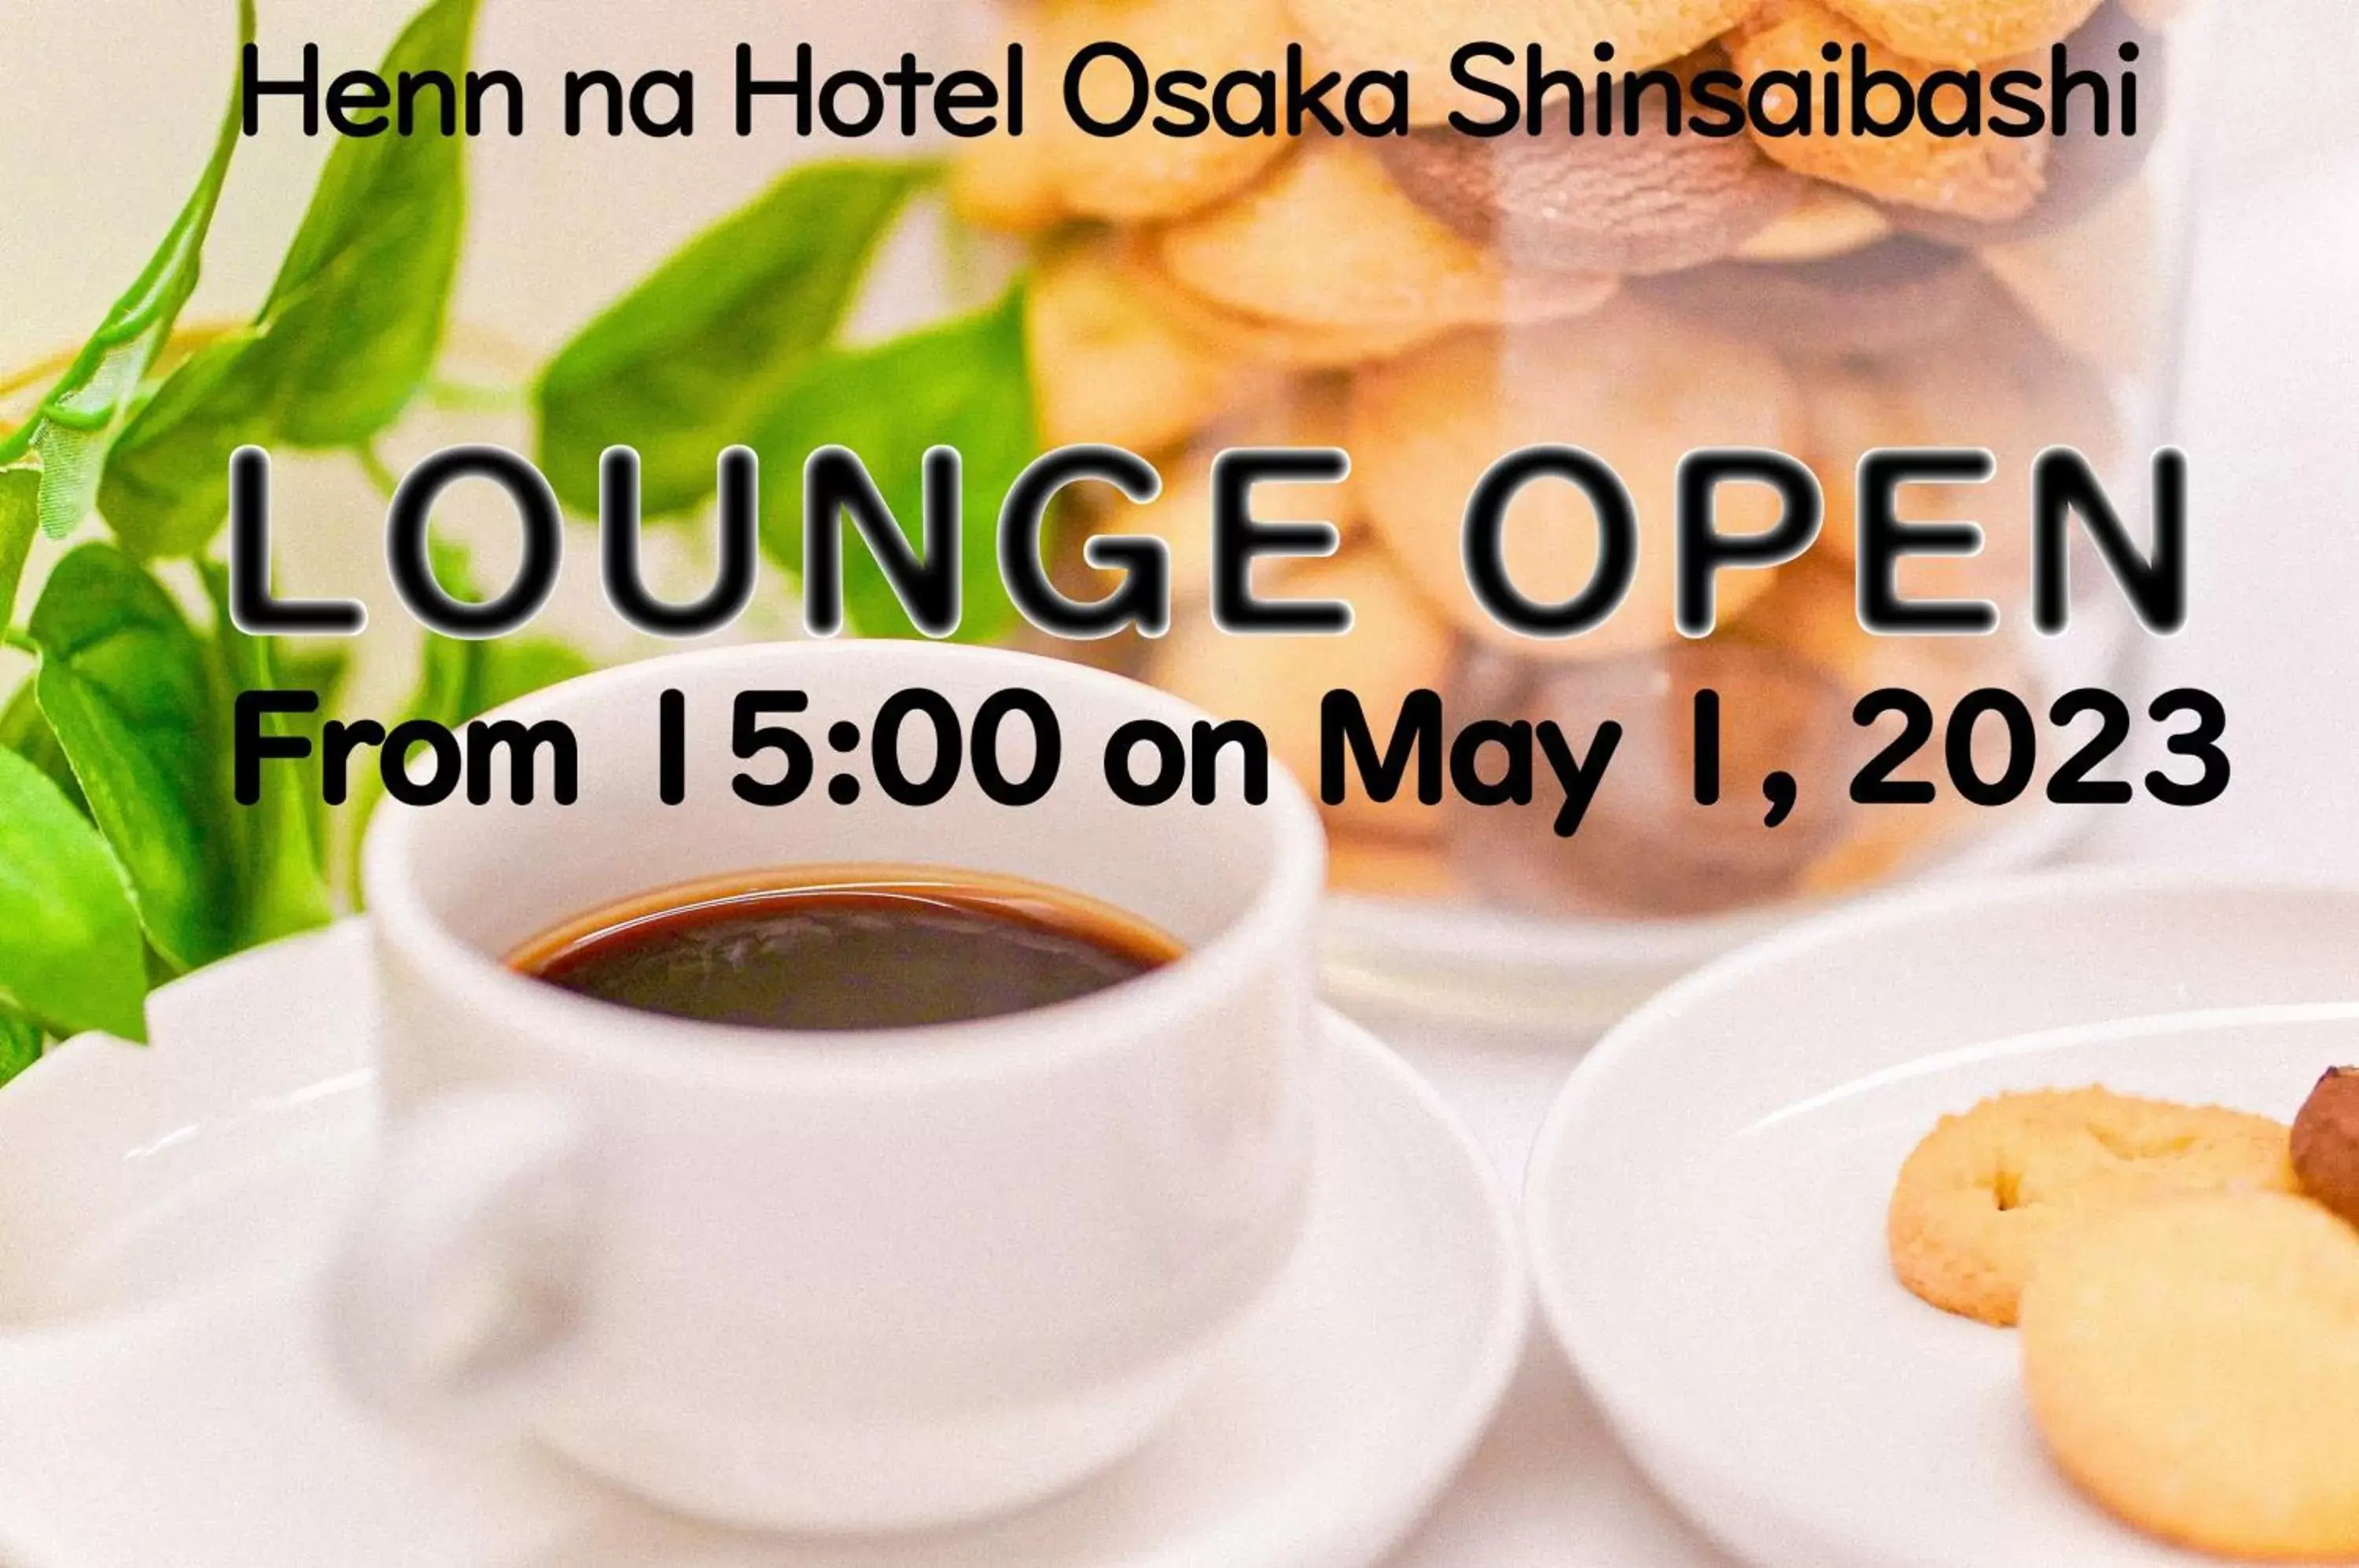 Food and drinks in Henn na Hotel Osaka Shinsaibashi